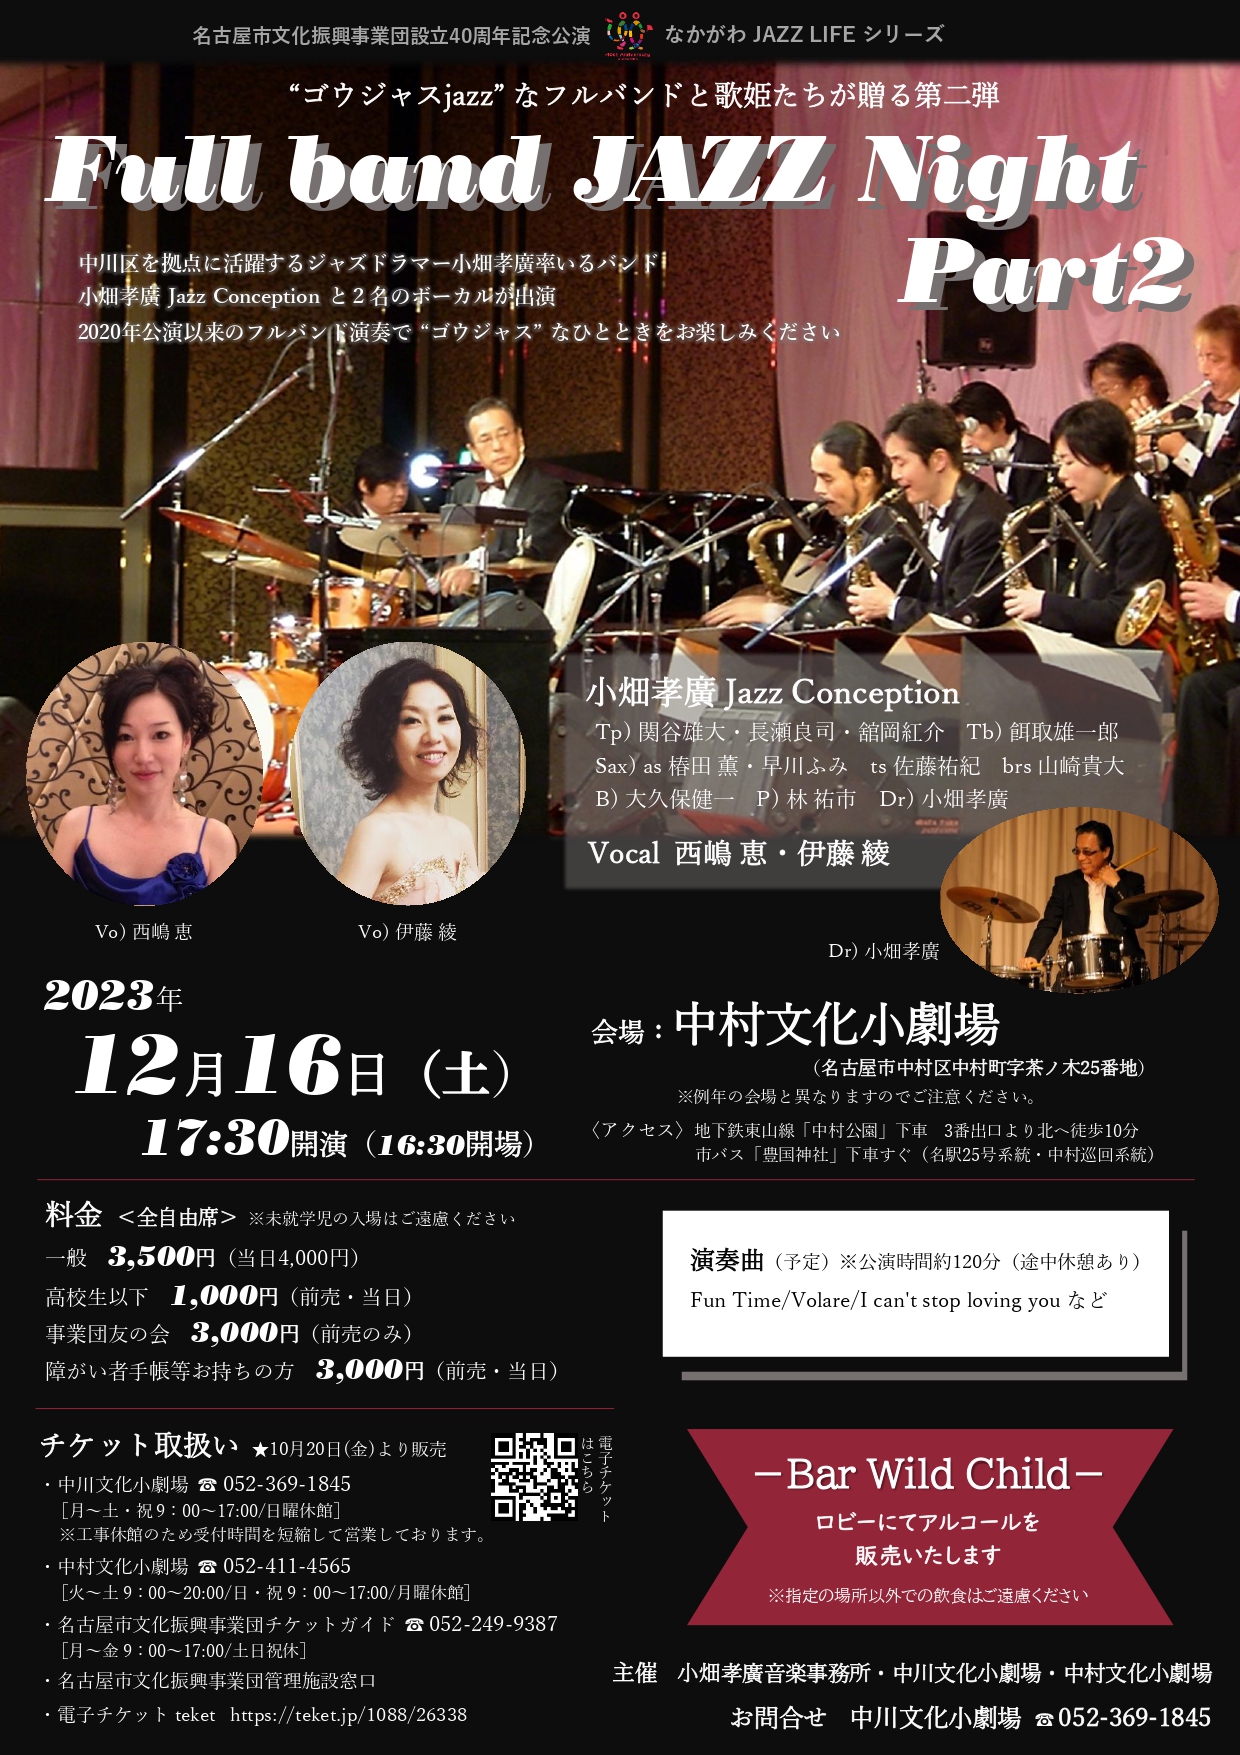 Full Band Jazz Night Part 2 【なかがわ JAZZ LIFE シリーズ】 のチラシ